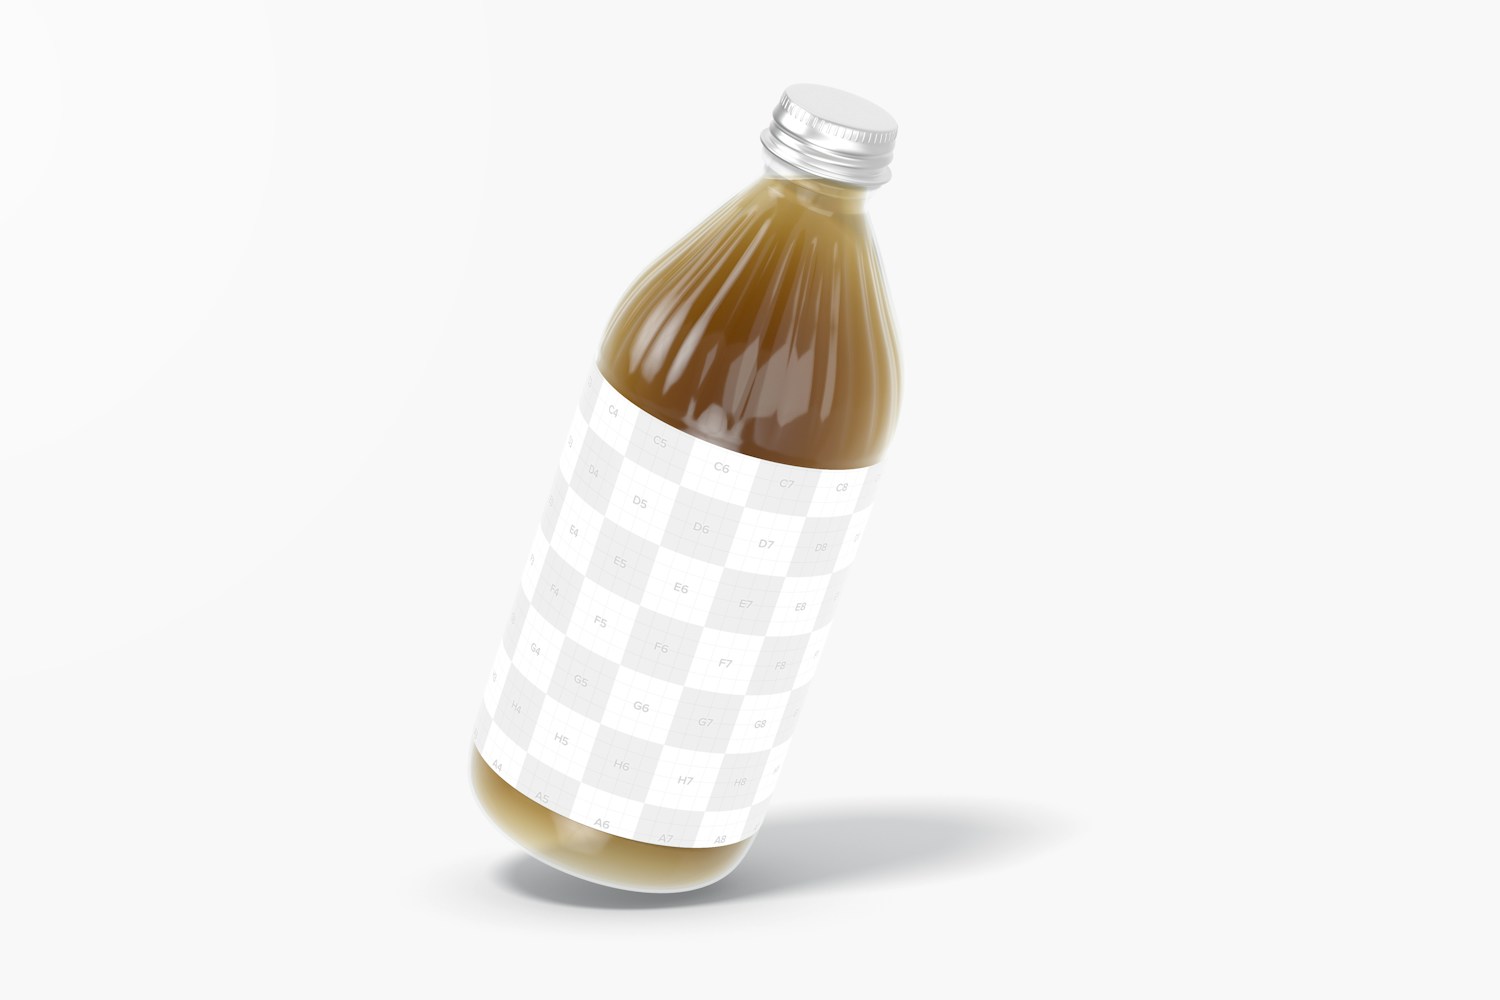 16 oz Glass Vinegar Bottle Mockup, Floating